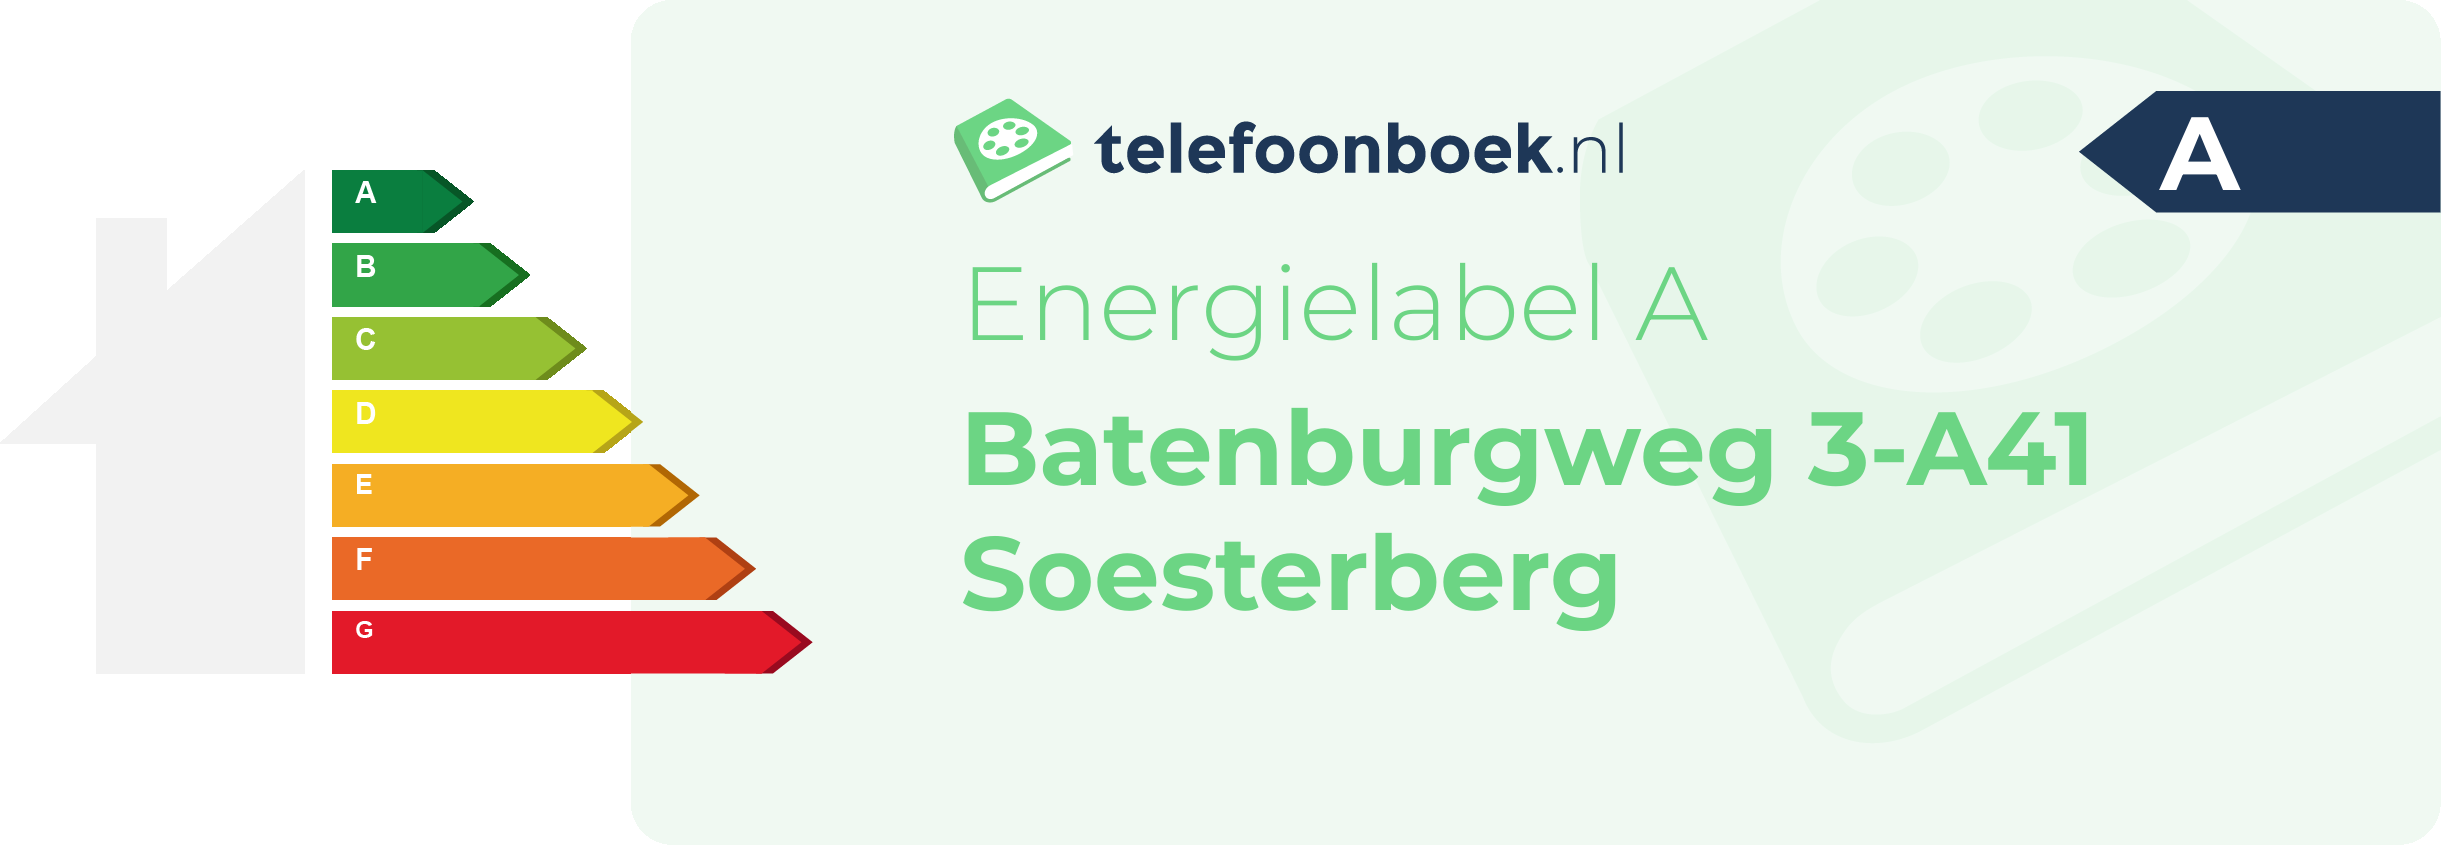 Energielabel Batenburgweg 3-A41 Soesterberg